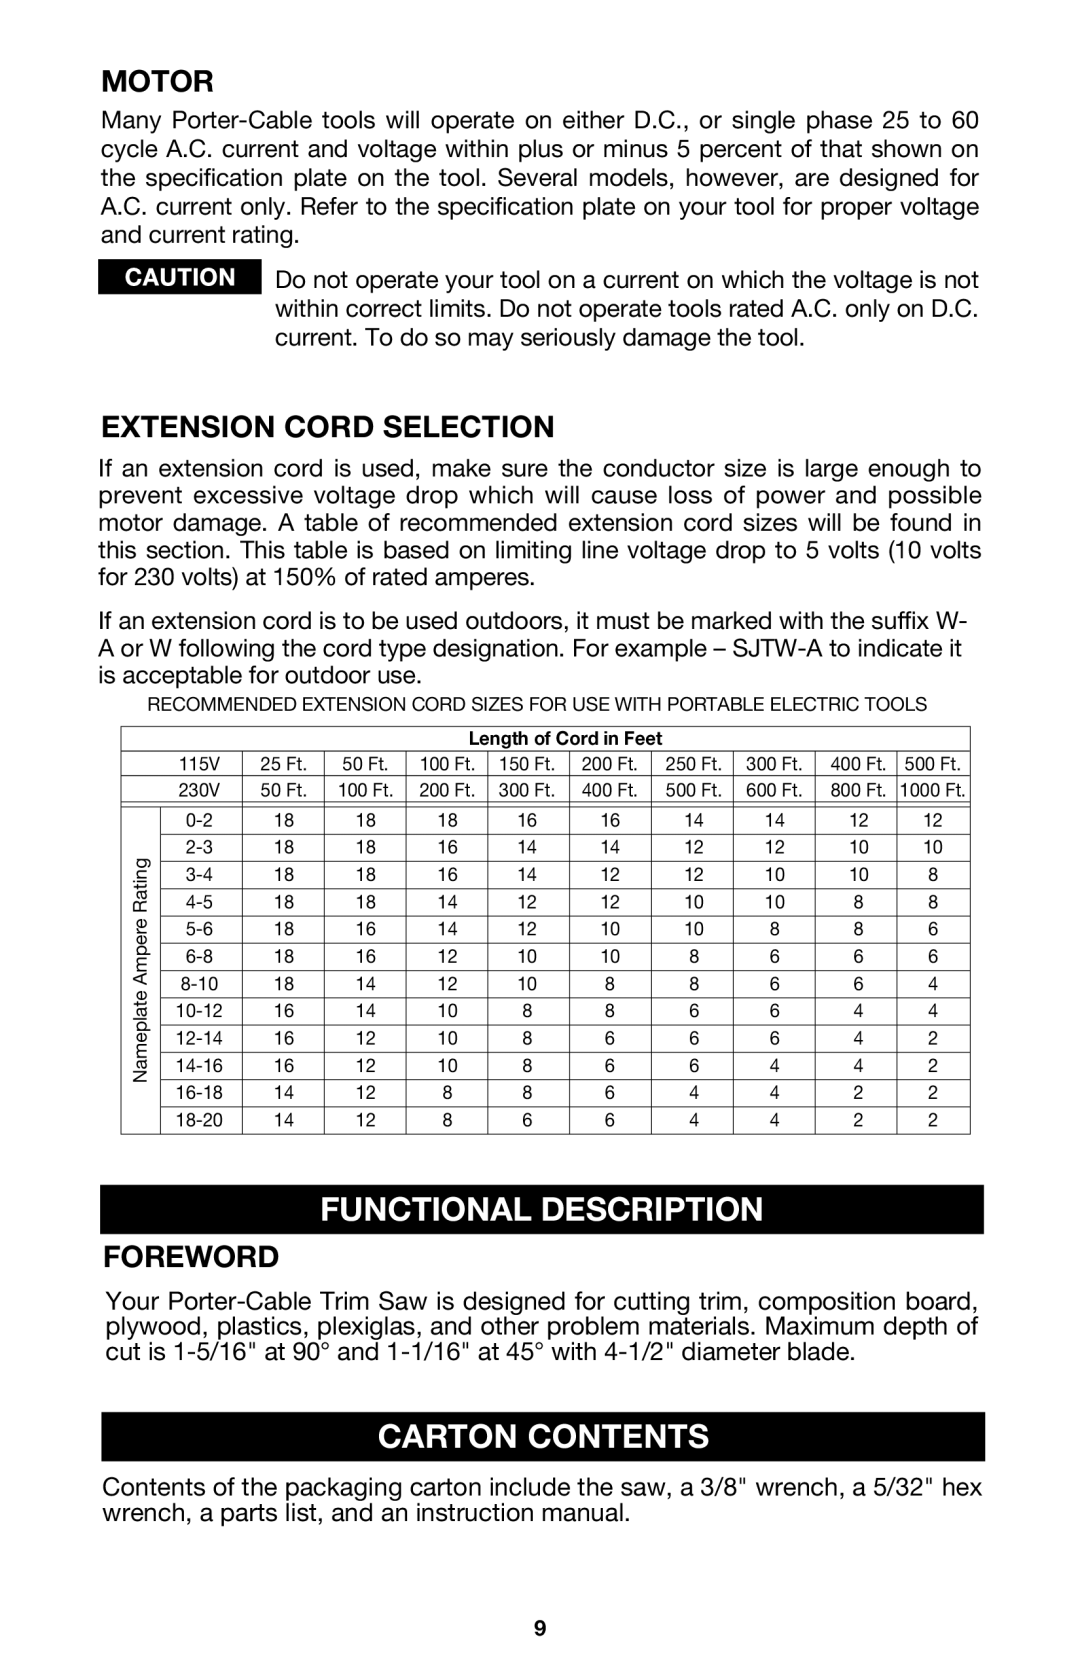 PYLE Audio 314 instruction manual Functional Description, Carton Contents, Motor, Extension Cord Selection, Foreword 